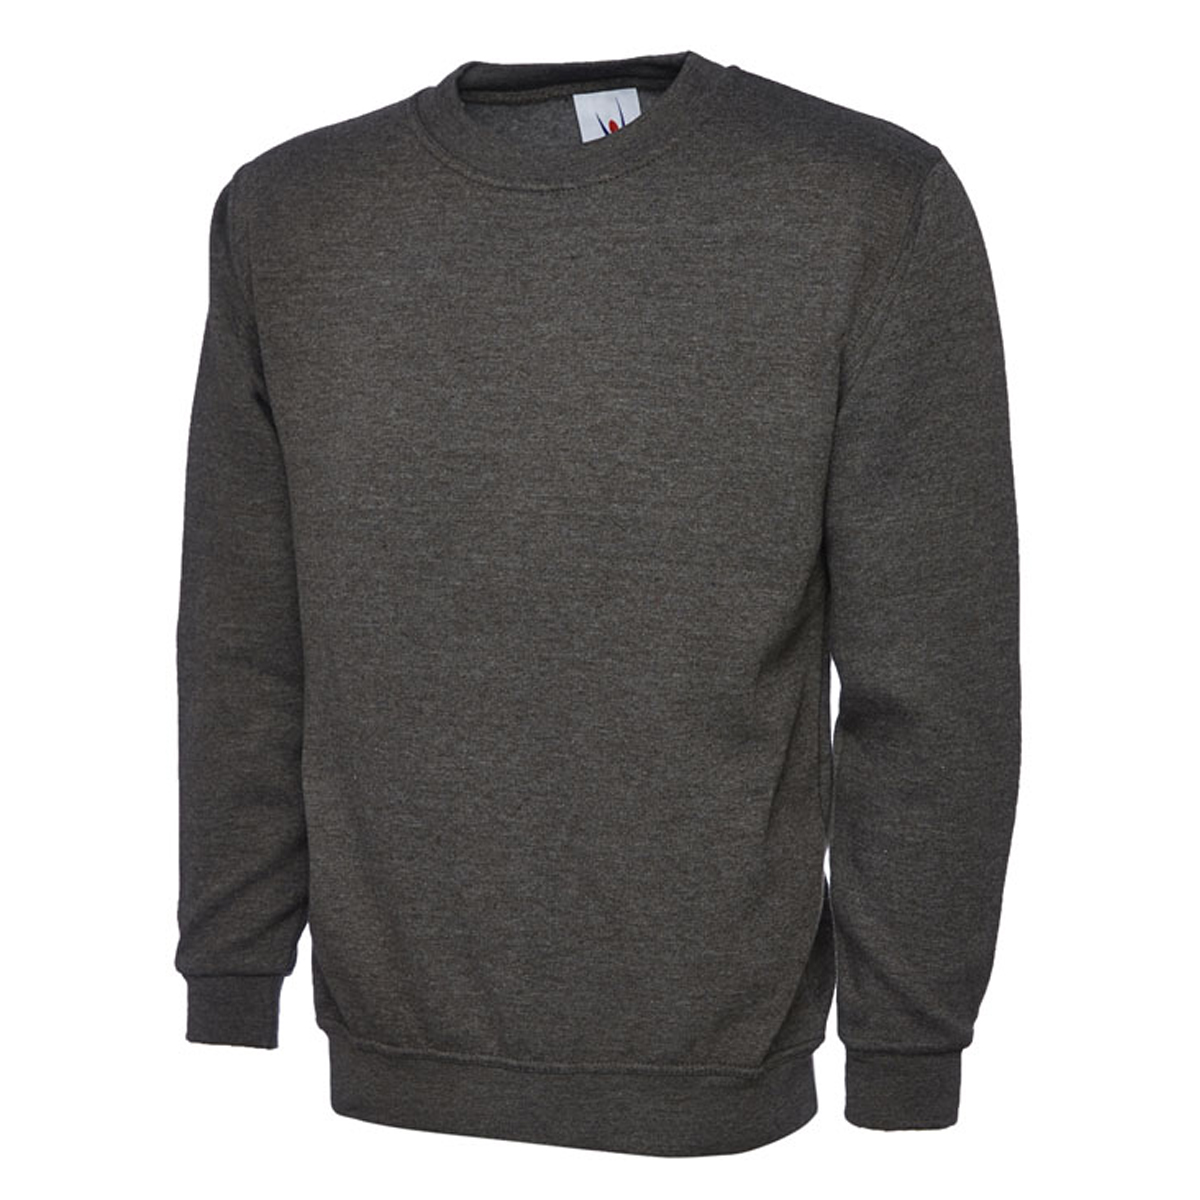 Uc203 300gsm classic sweatshirt - charcoal - small